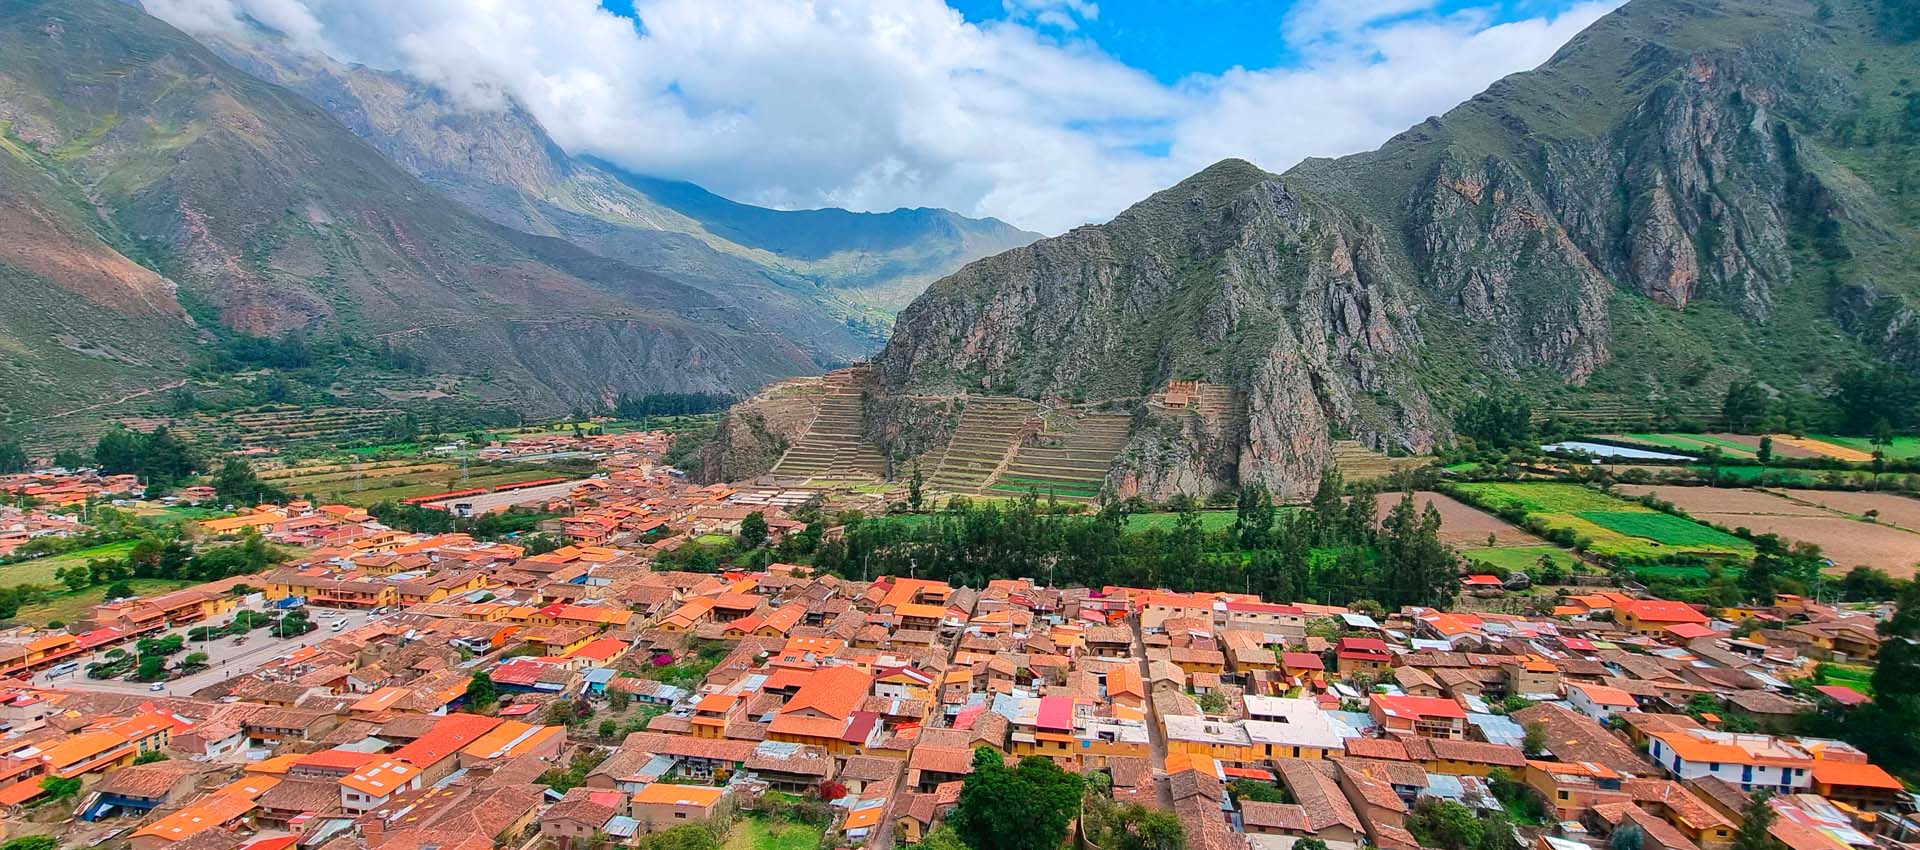 Sacred Valley & Machu Picchu Tour 2 Days - Incatrailhikeperu